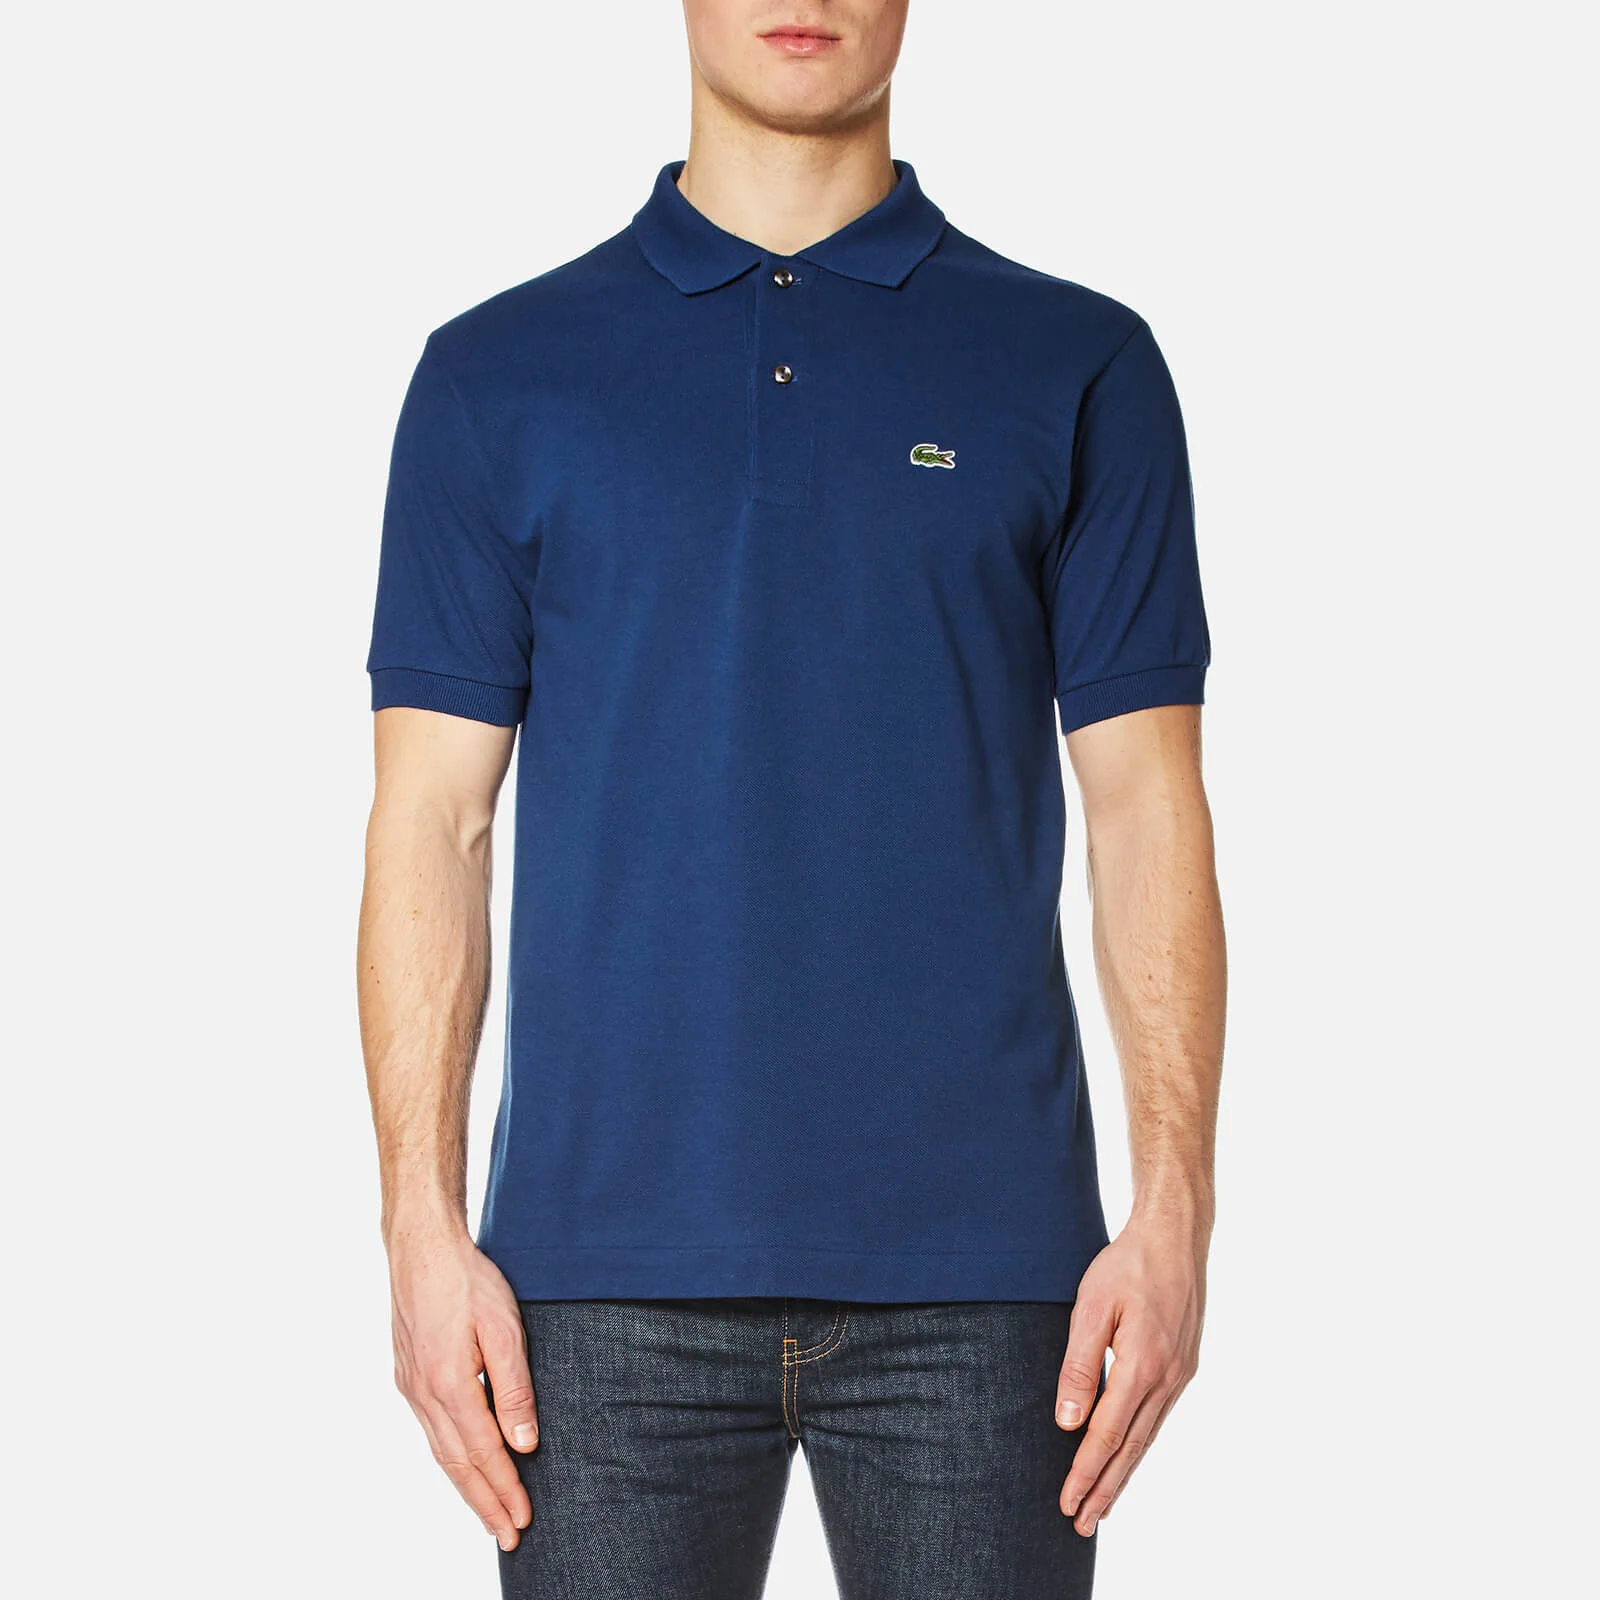 Lacoste Men's Polo Shirt - Deep Blue Image 1